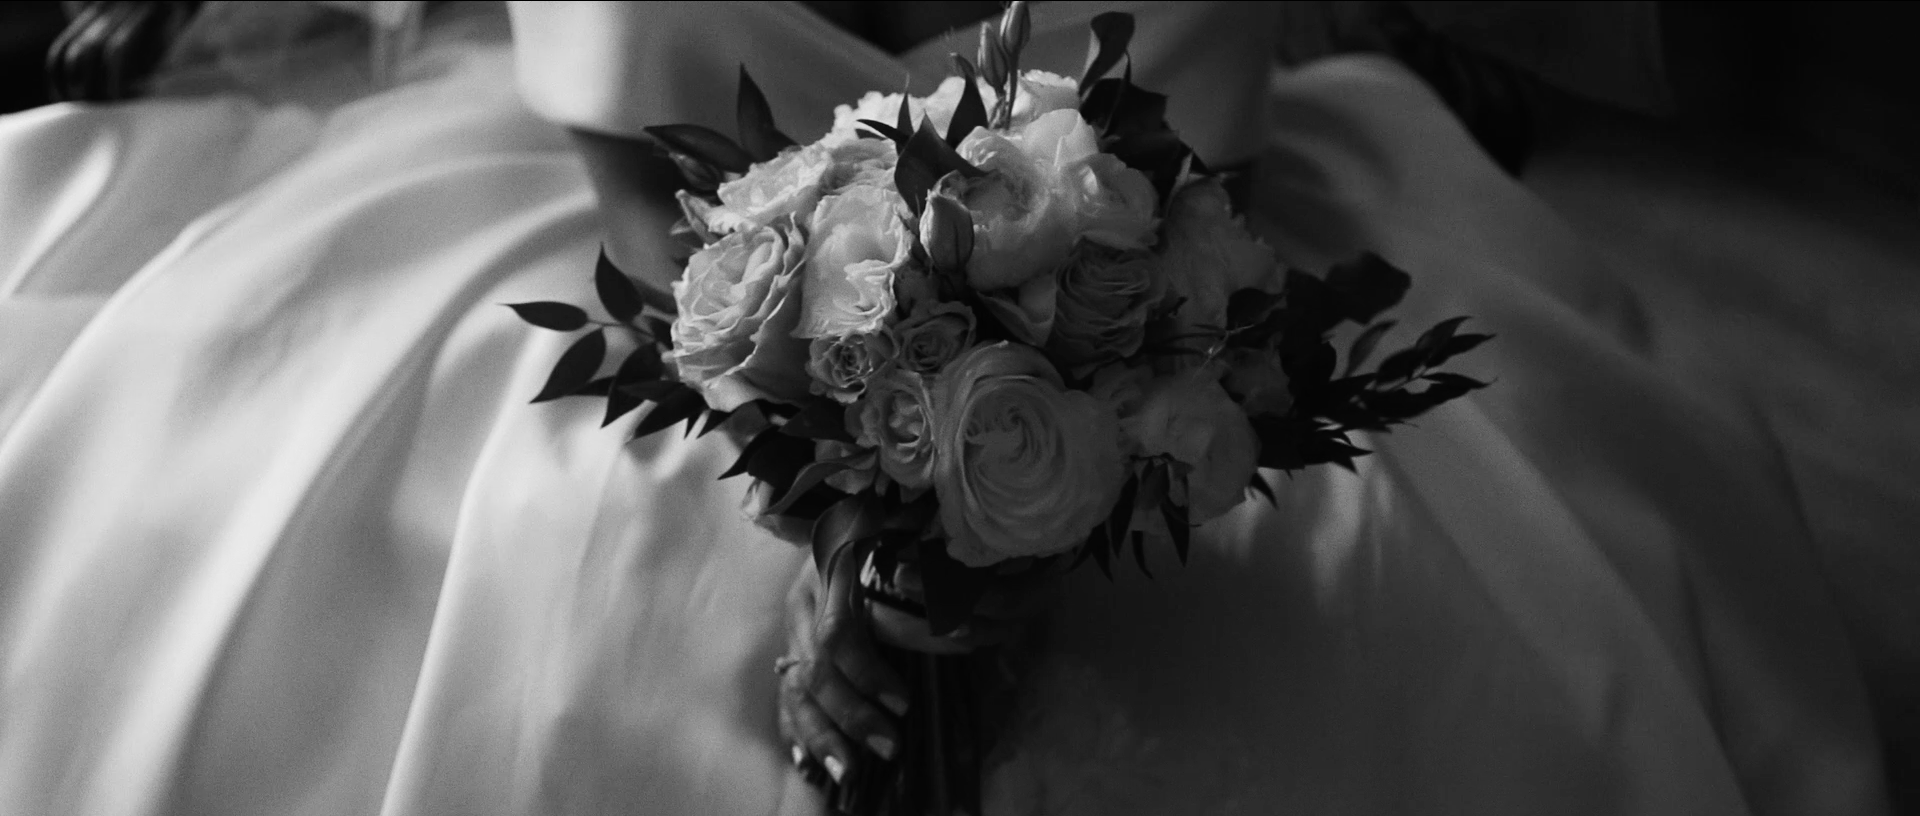 Lewis+Clark+College+Wedding+Videographer+Photographer_013.png